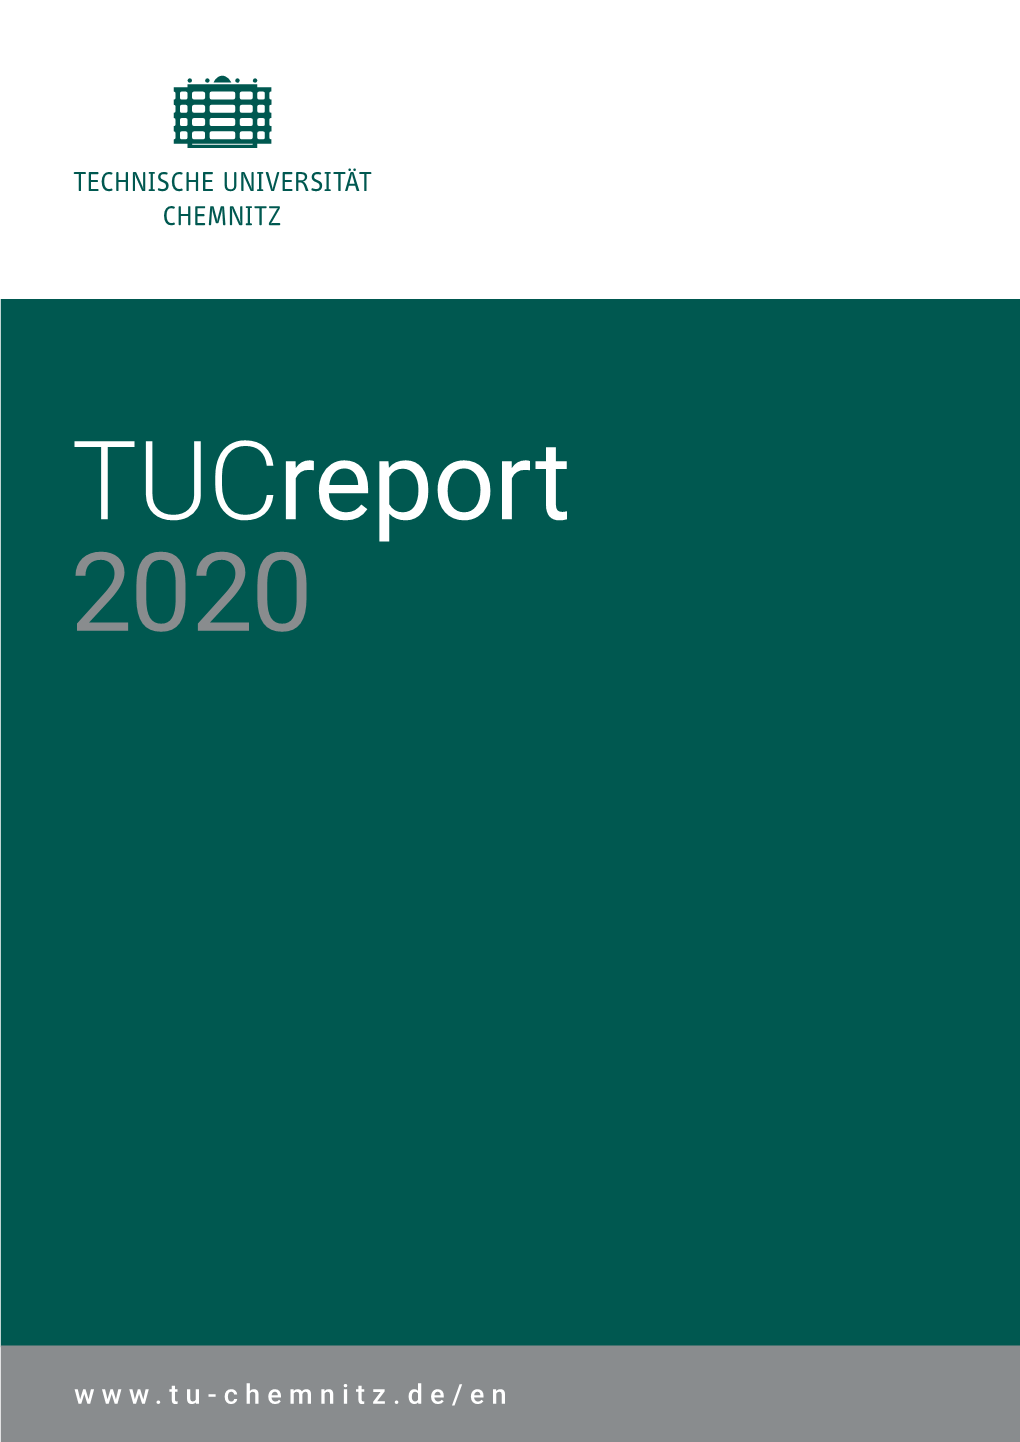 Tucreport 2020